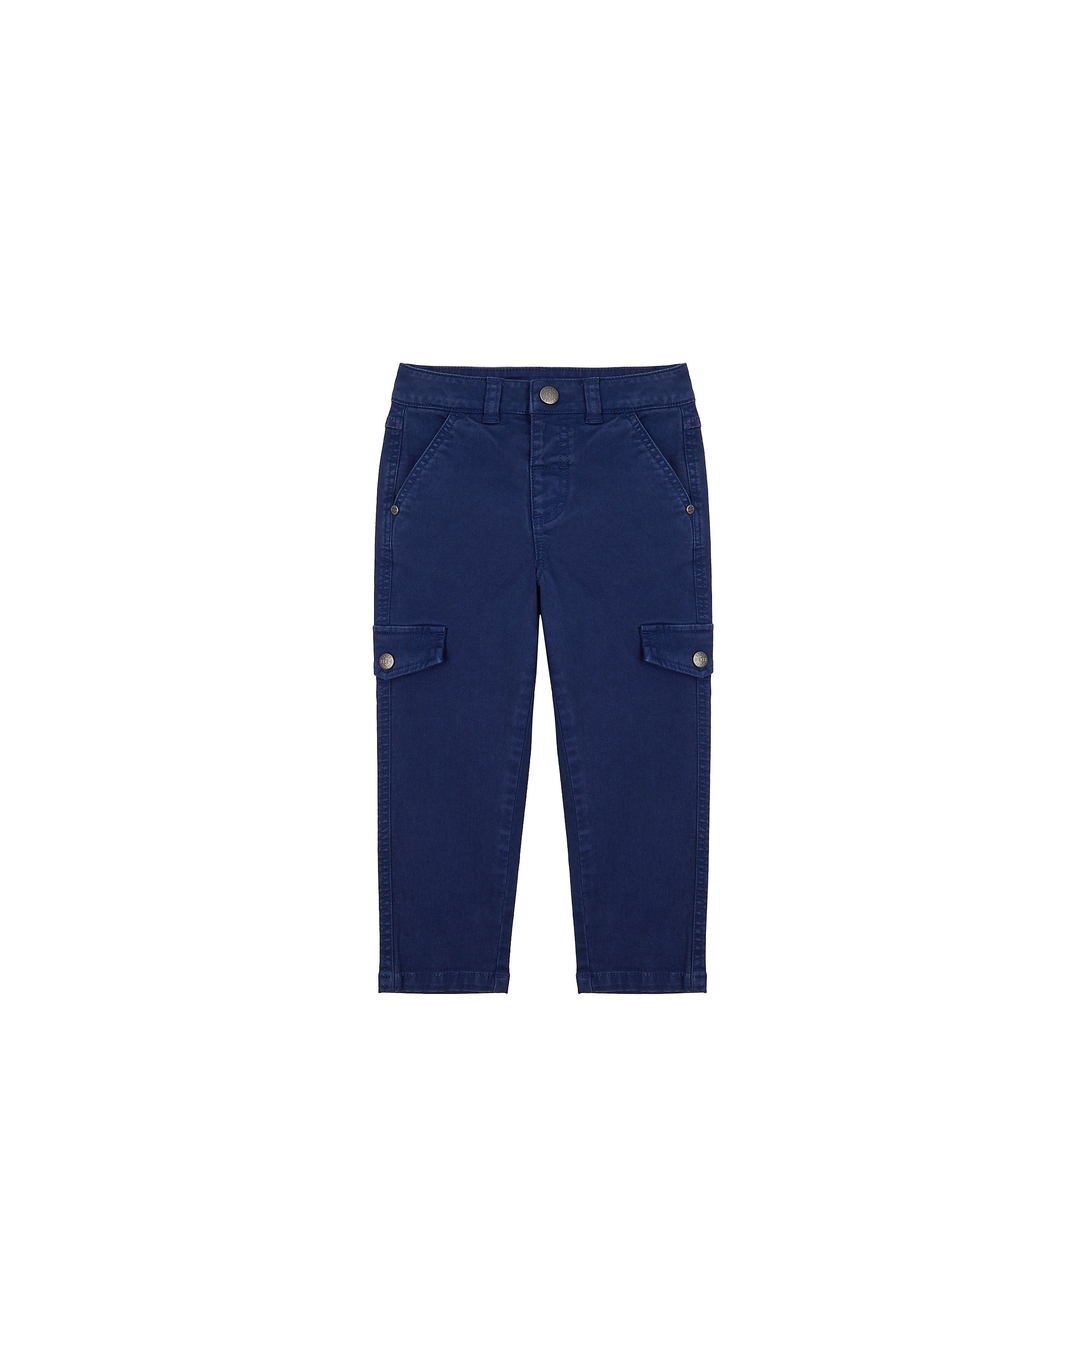 Buy Beauty Centre School Uniform Boys Navy Blue Full Pants with Double  Pleats Regular Fit L38XW28 at Amazonin